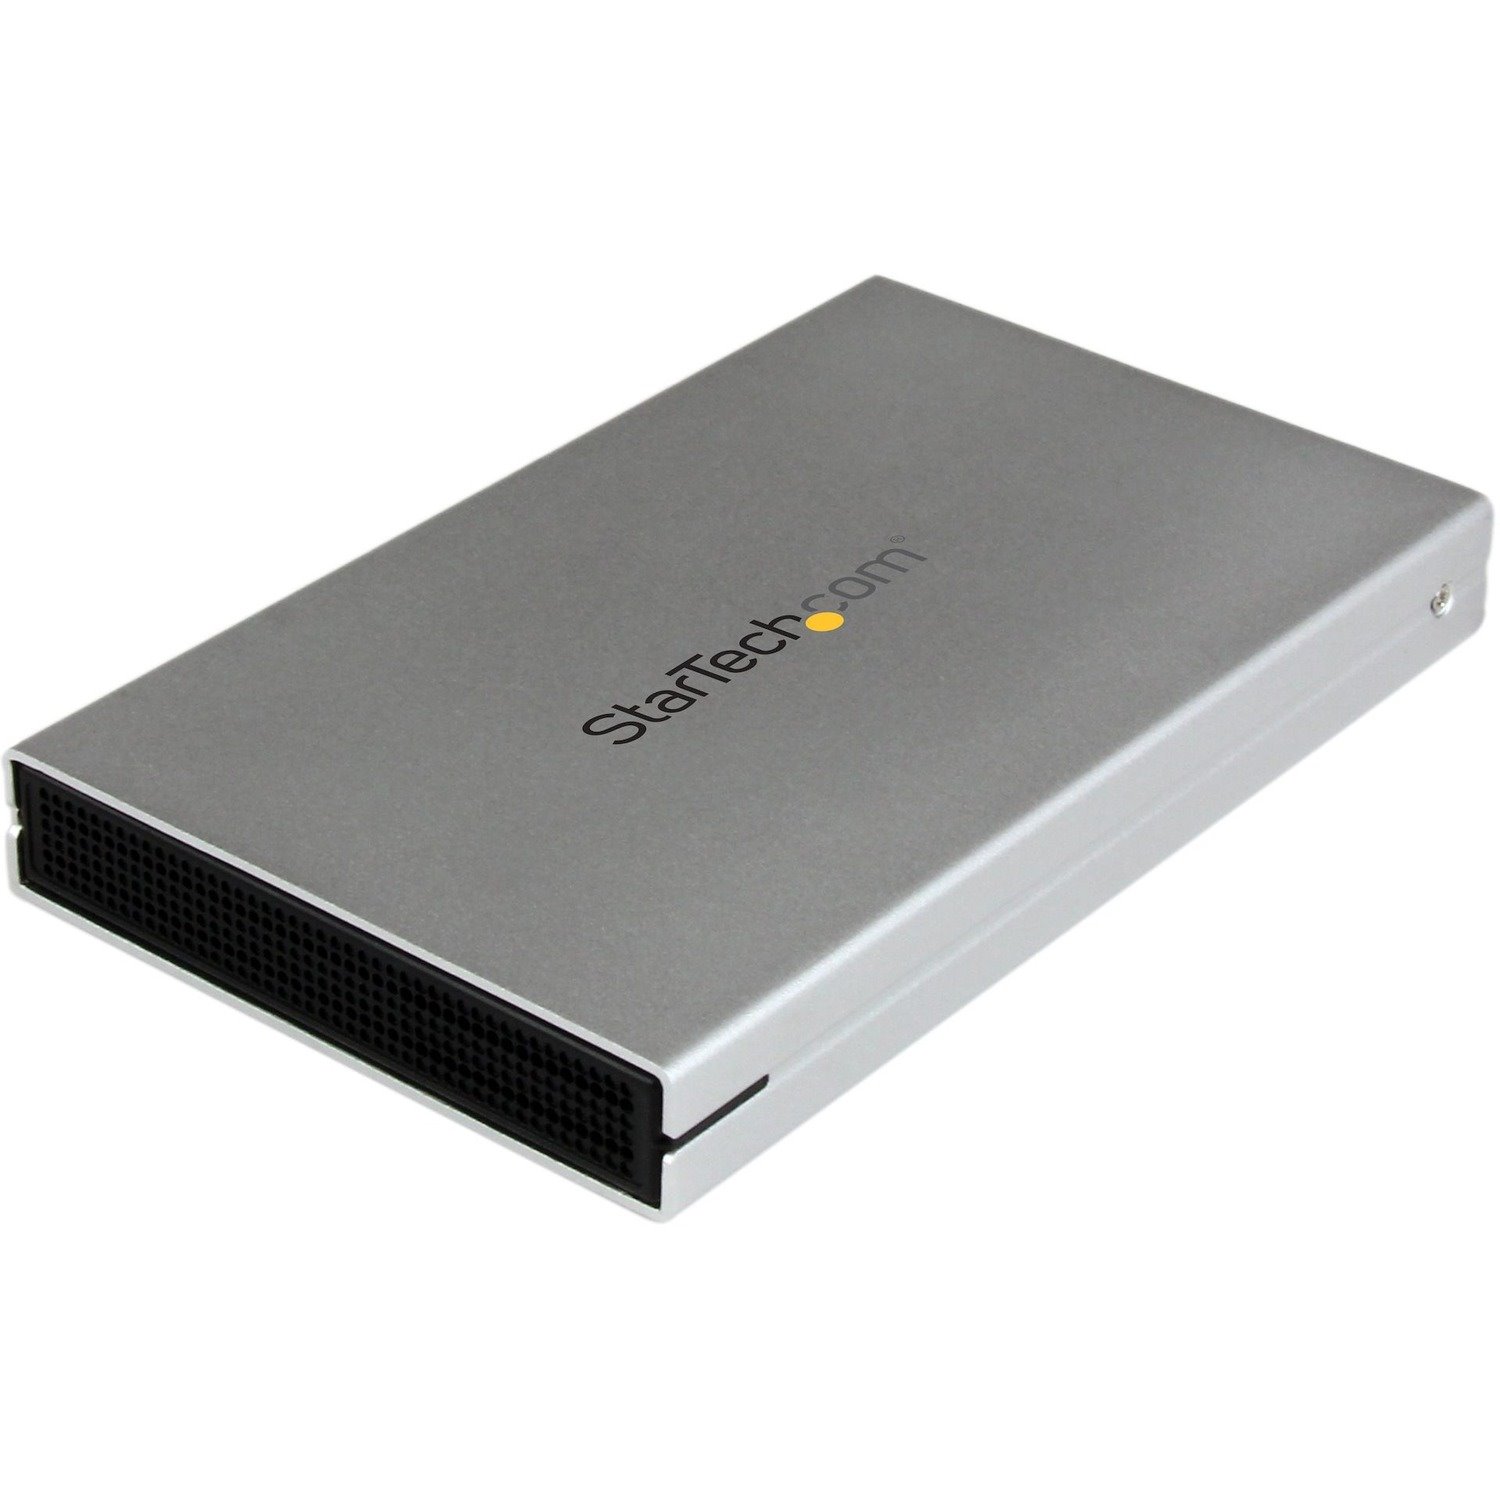 StarTech.com Drive Enclosure SATA/600 - USB 3.0 Type B, eSATAp Host Interface - UASP Support External - Silver